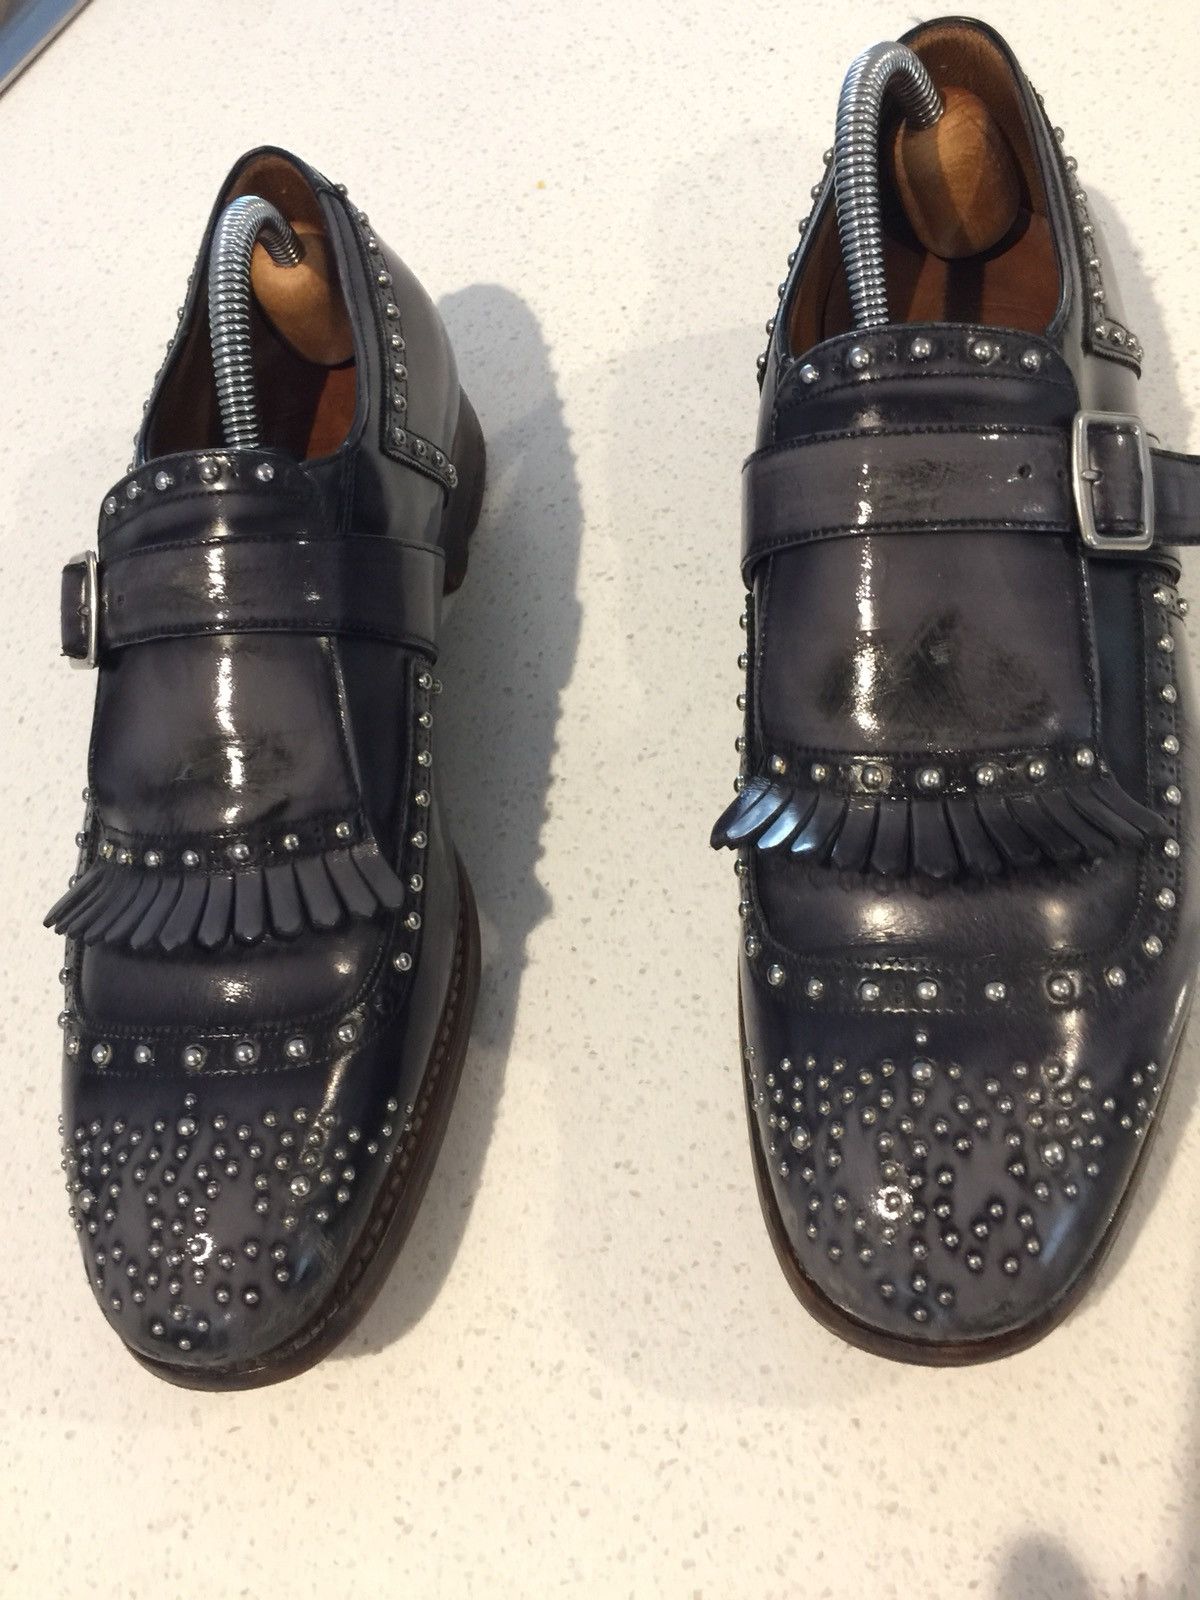 Church's Monk Strap Shoes, $1,363, farfetch.com